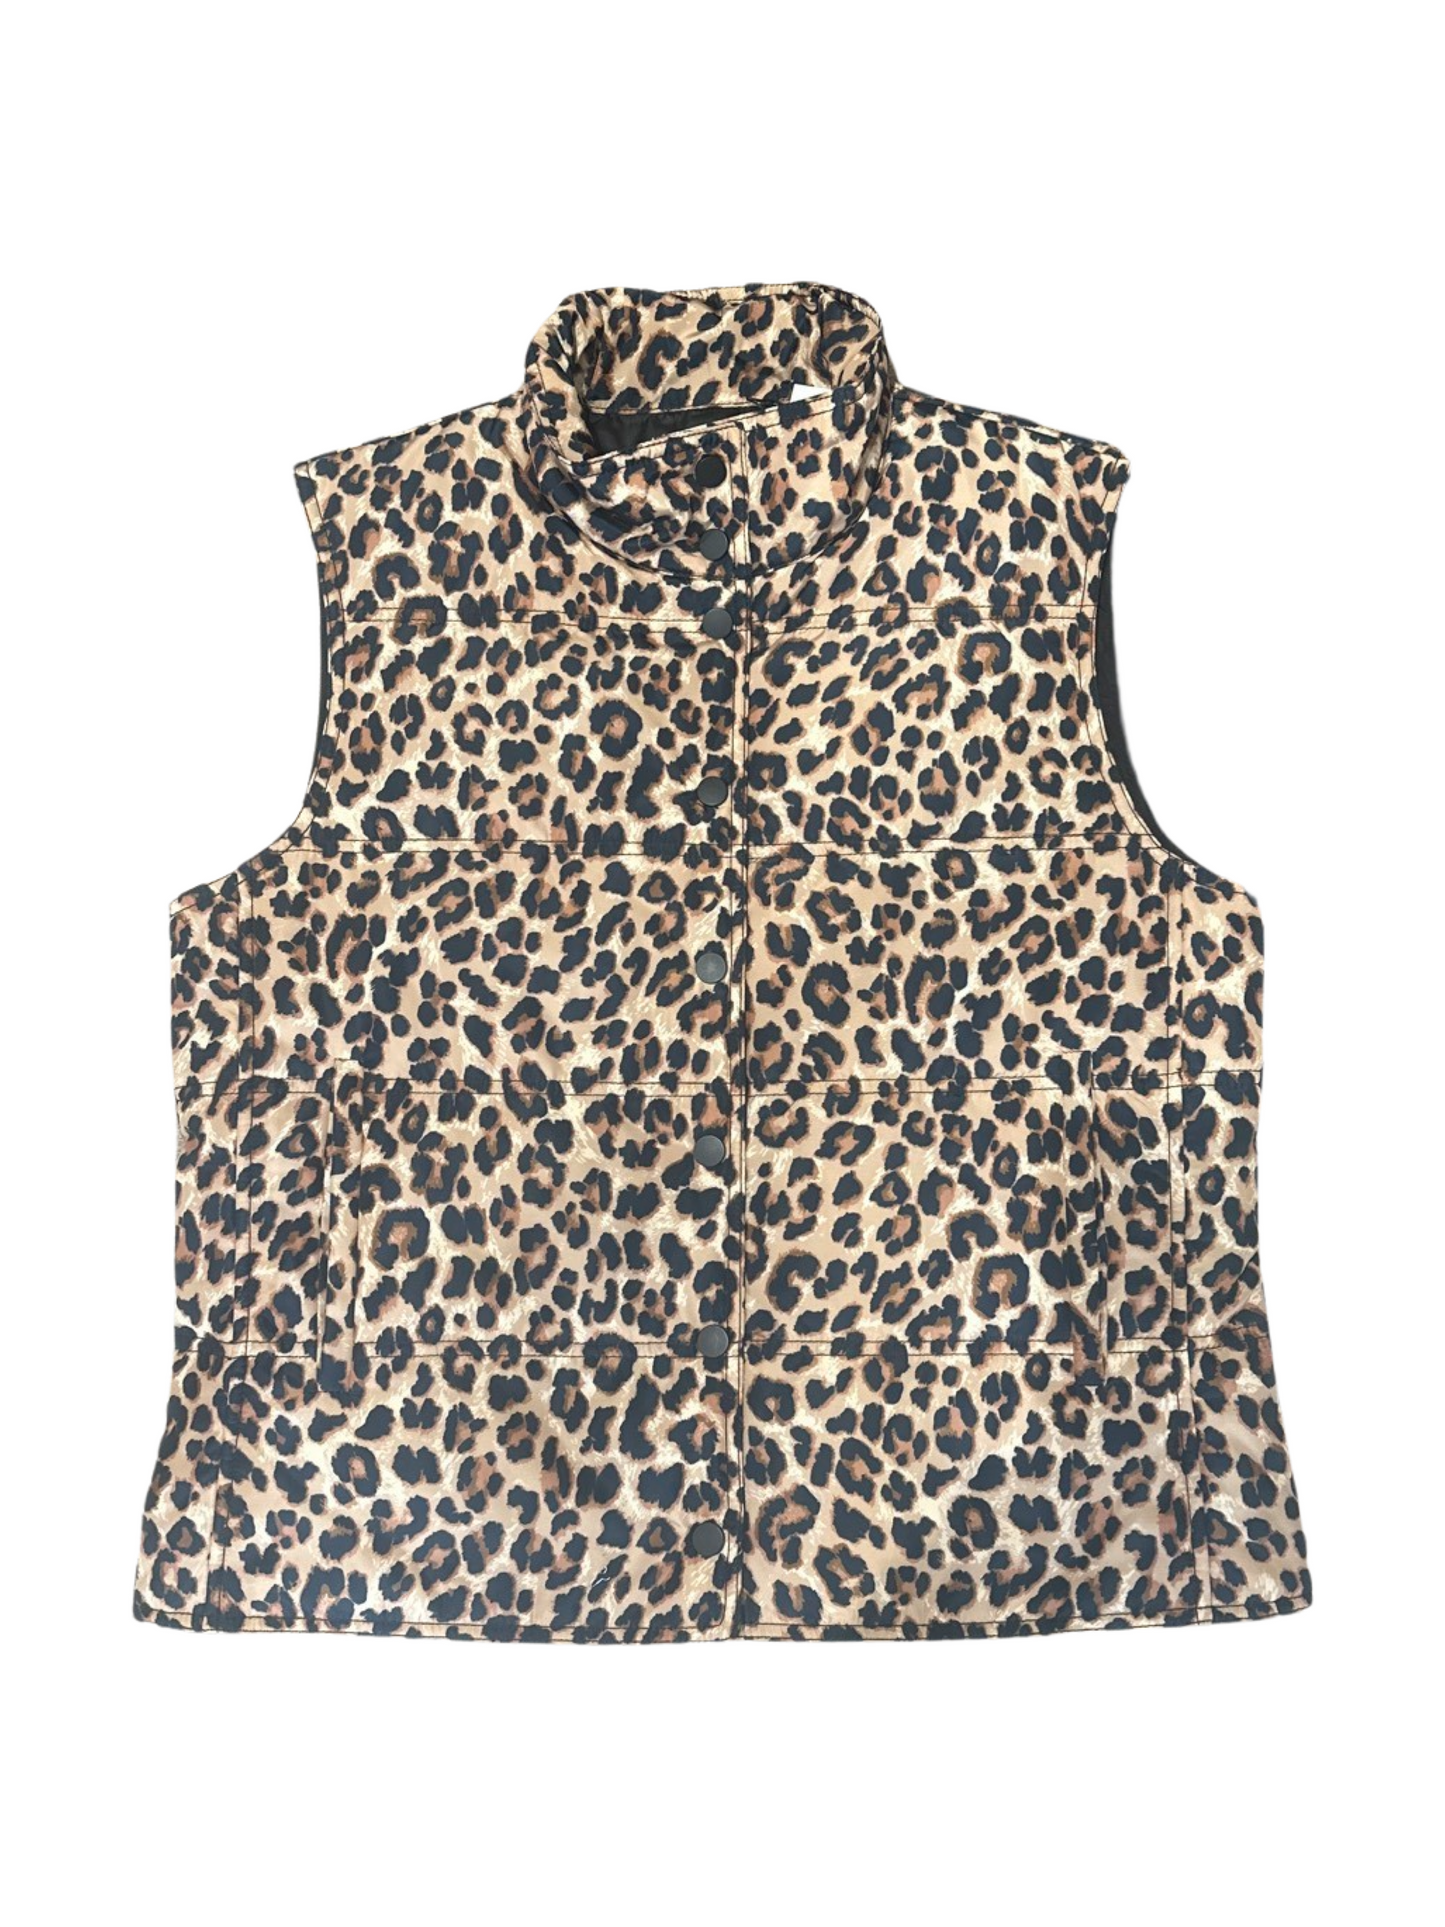 Veronica Beard Leopard Print Cushing Puffer Vest Size M